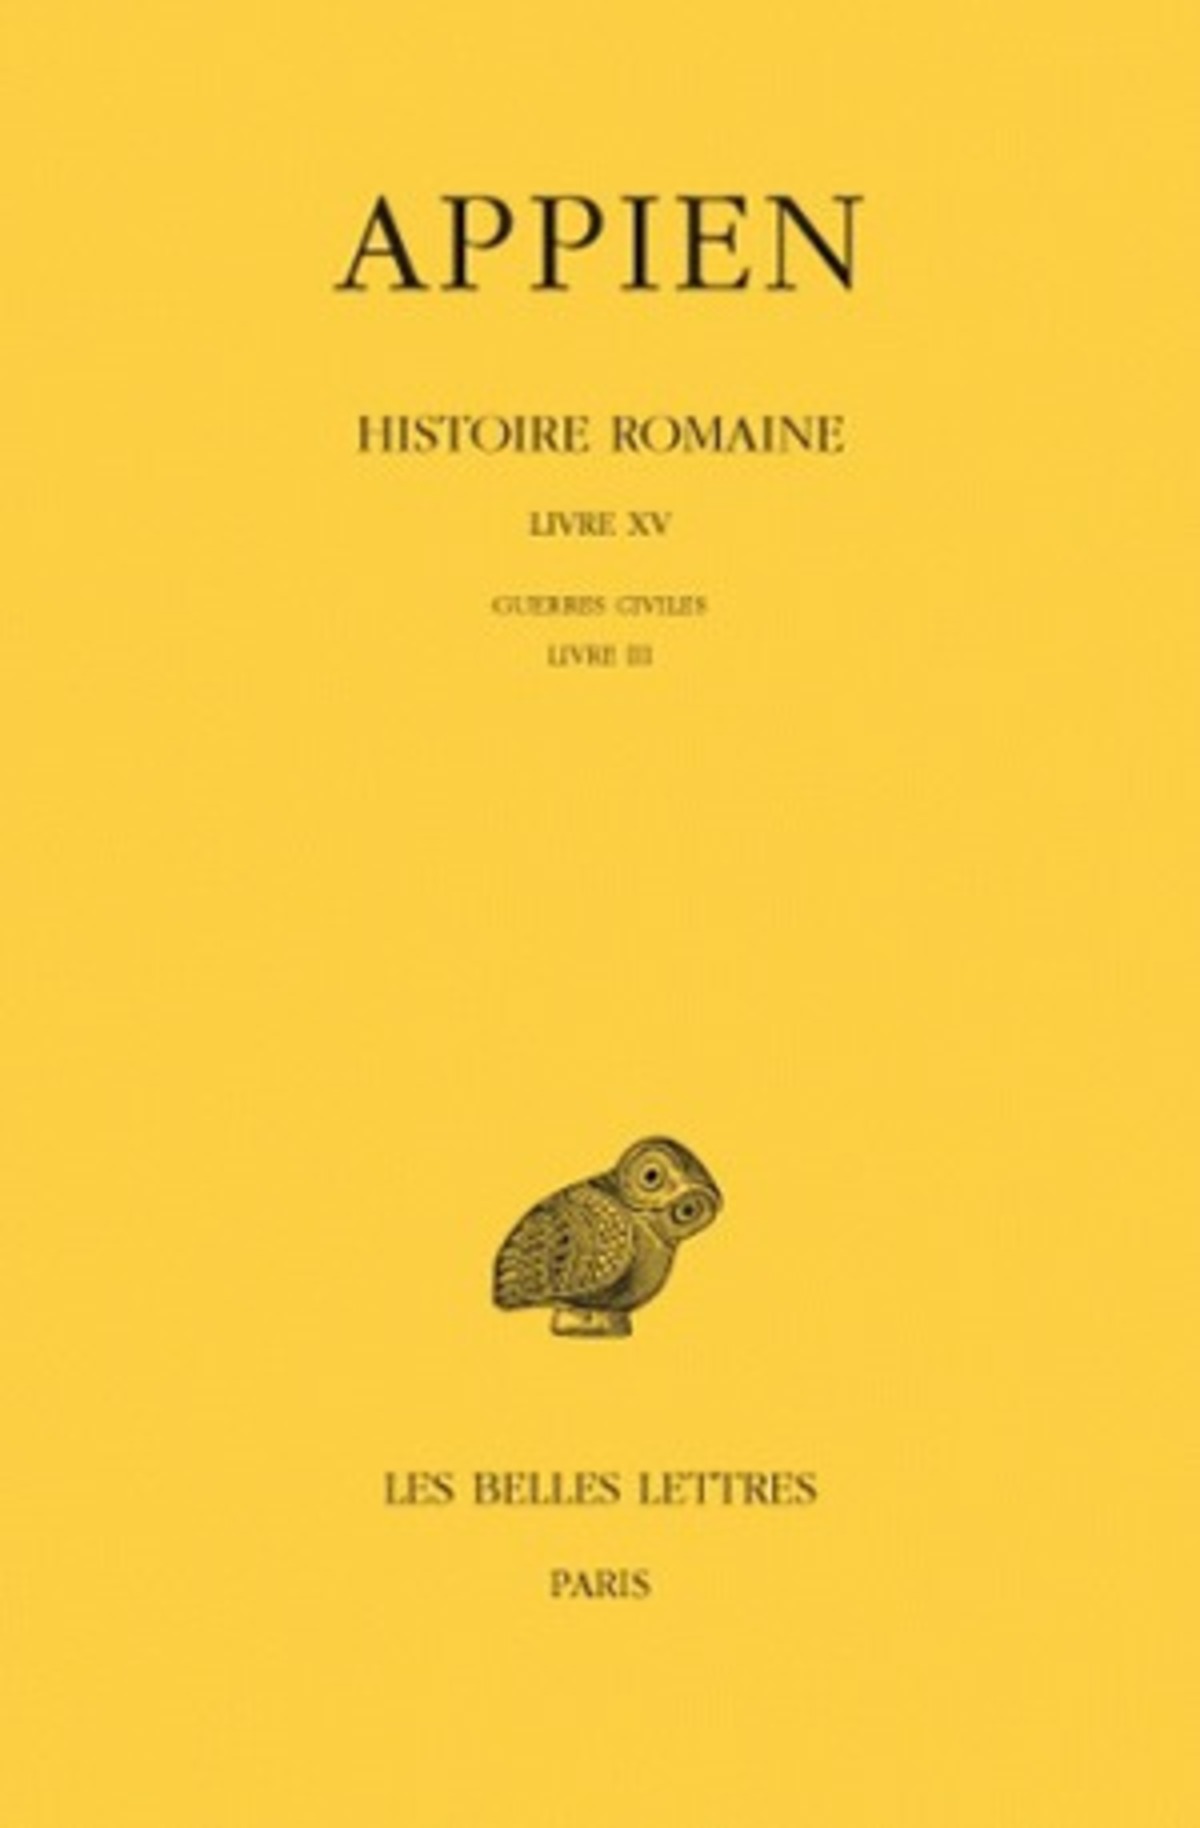 Histoire romaine. Tome X, Livre XV: Guerres civiles, Livre III